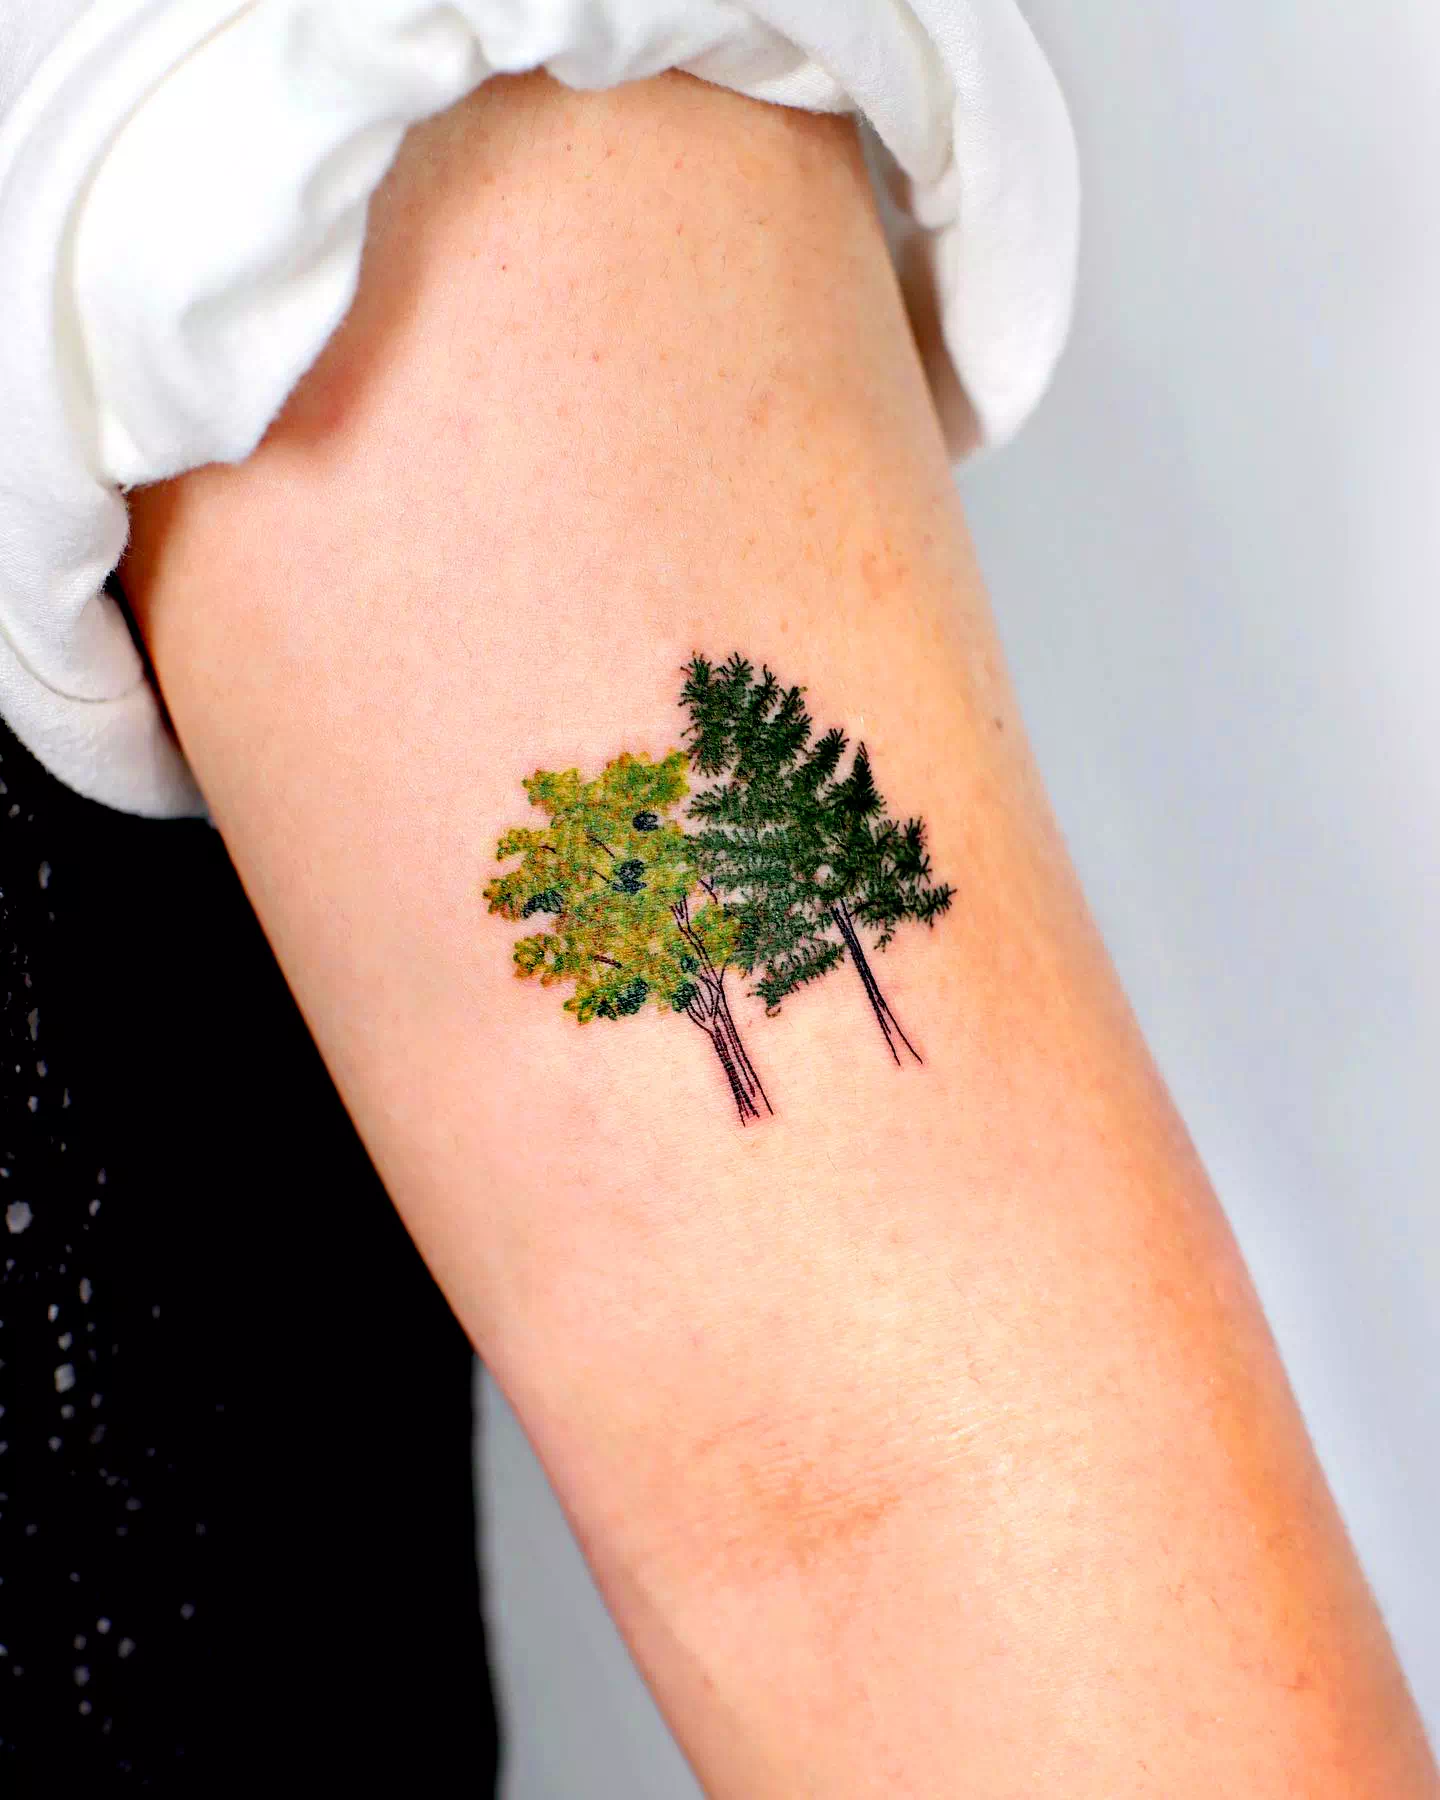 Armband Arm Tattoo Baum Idee